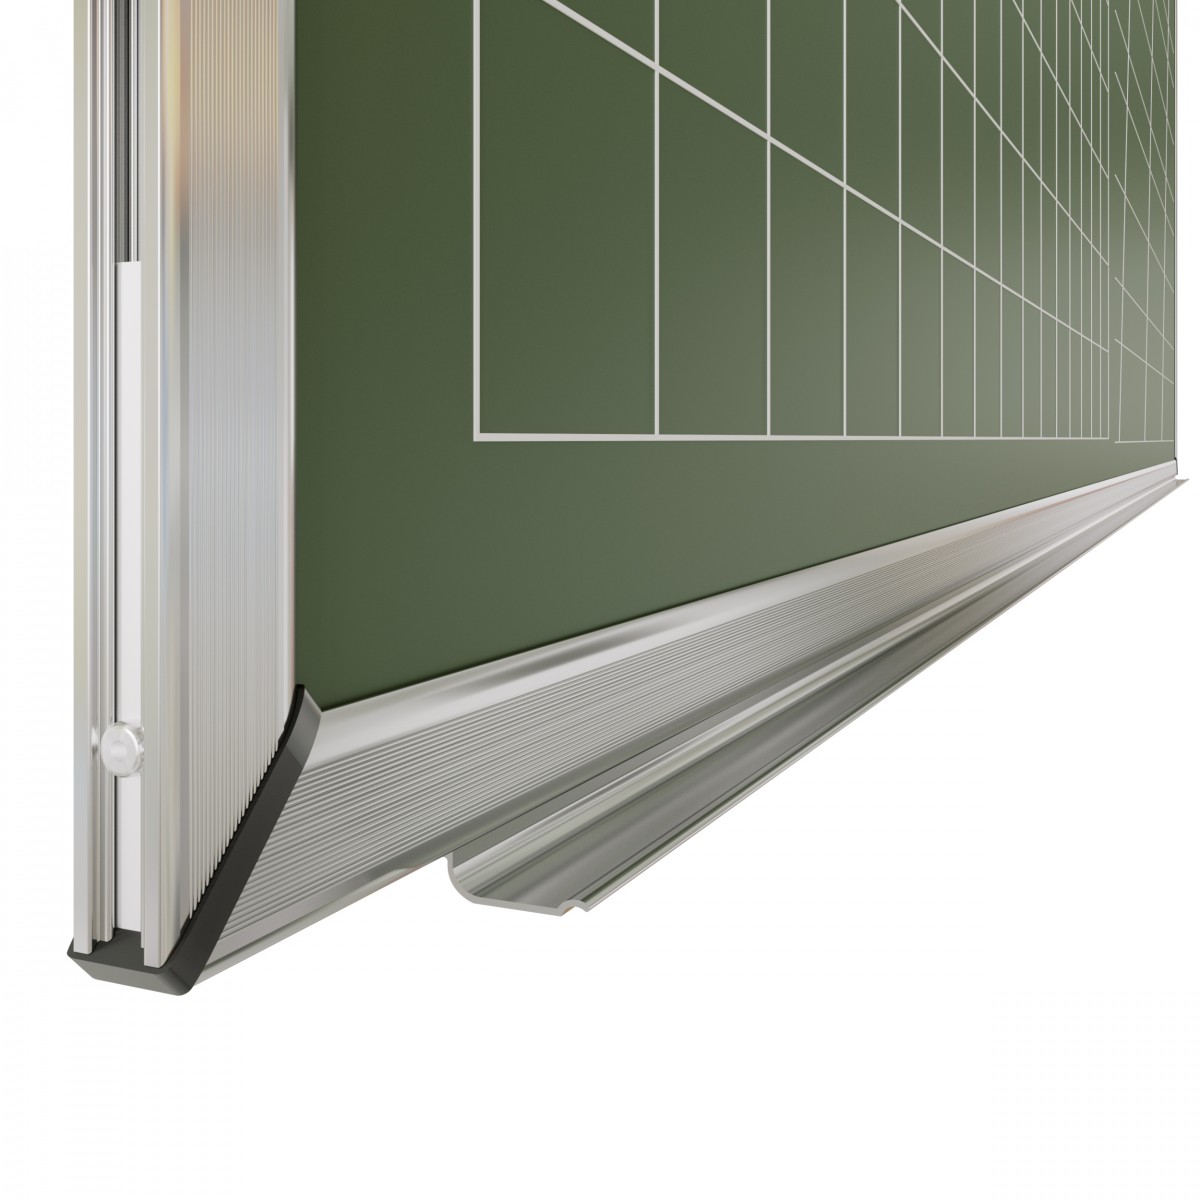 Chalkboard 2000х1000 mm "Standard" "LINE+CELL"